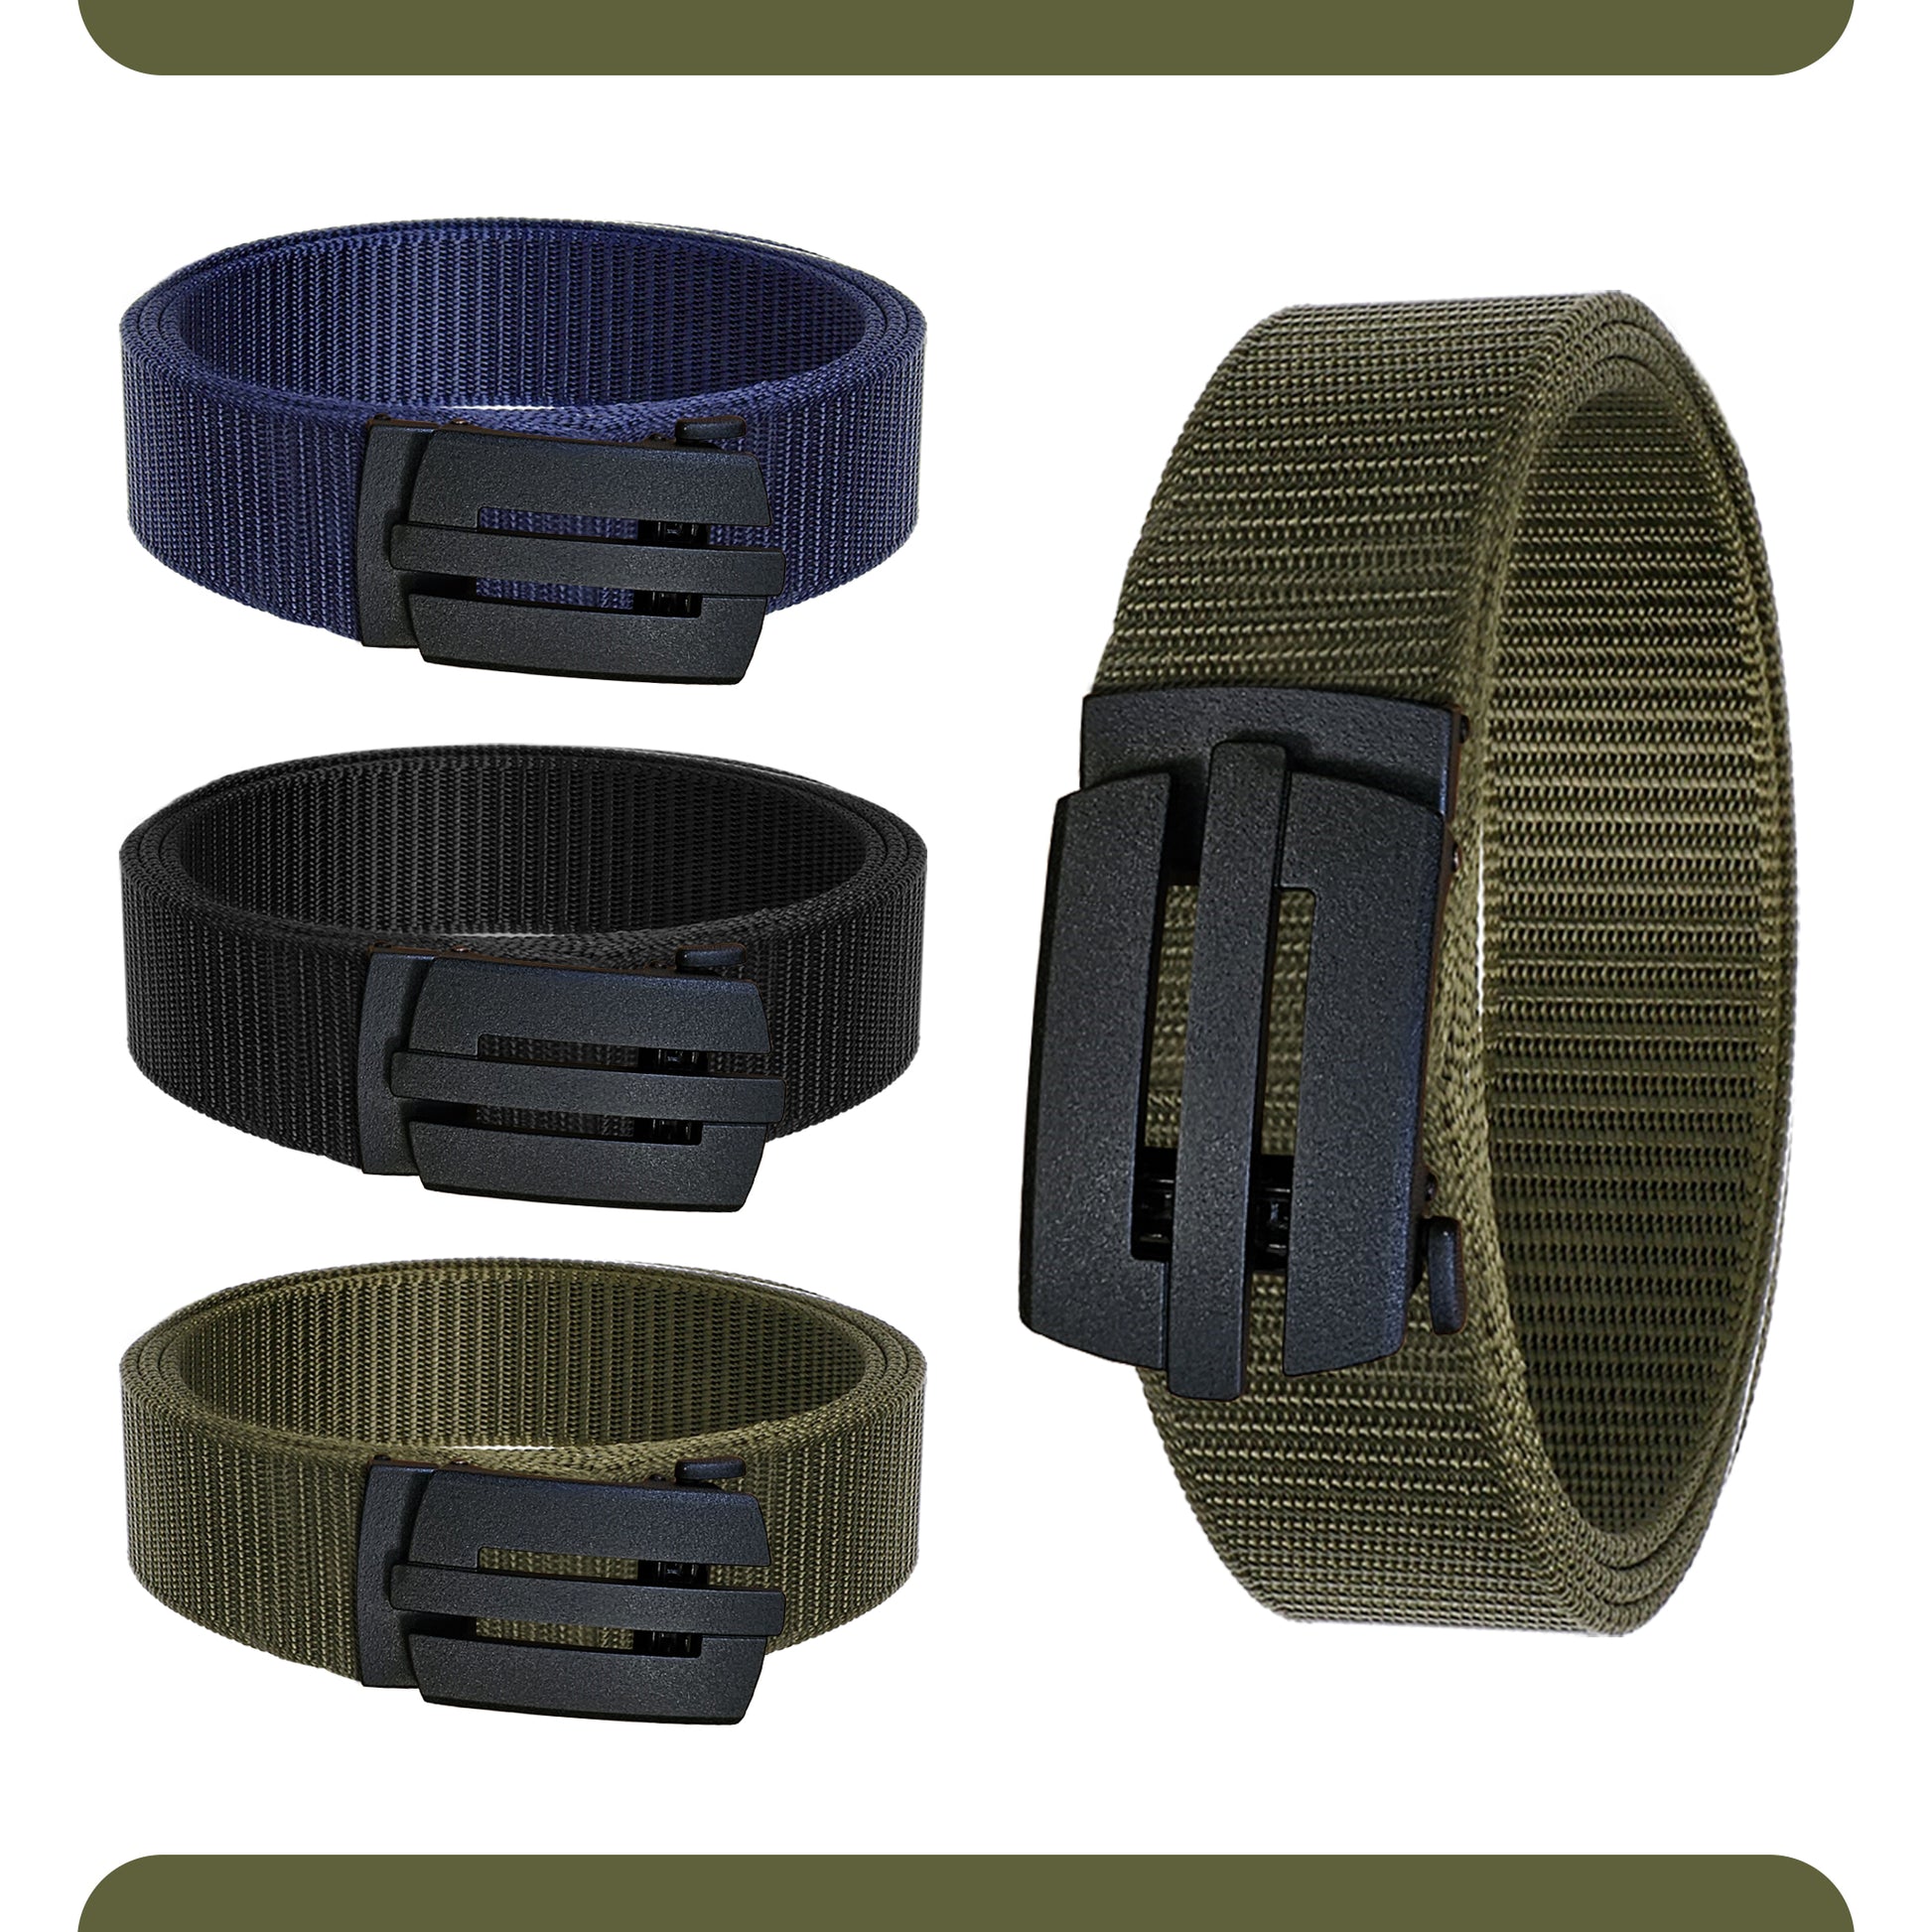 Flexible belt